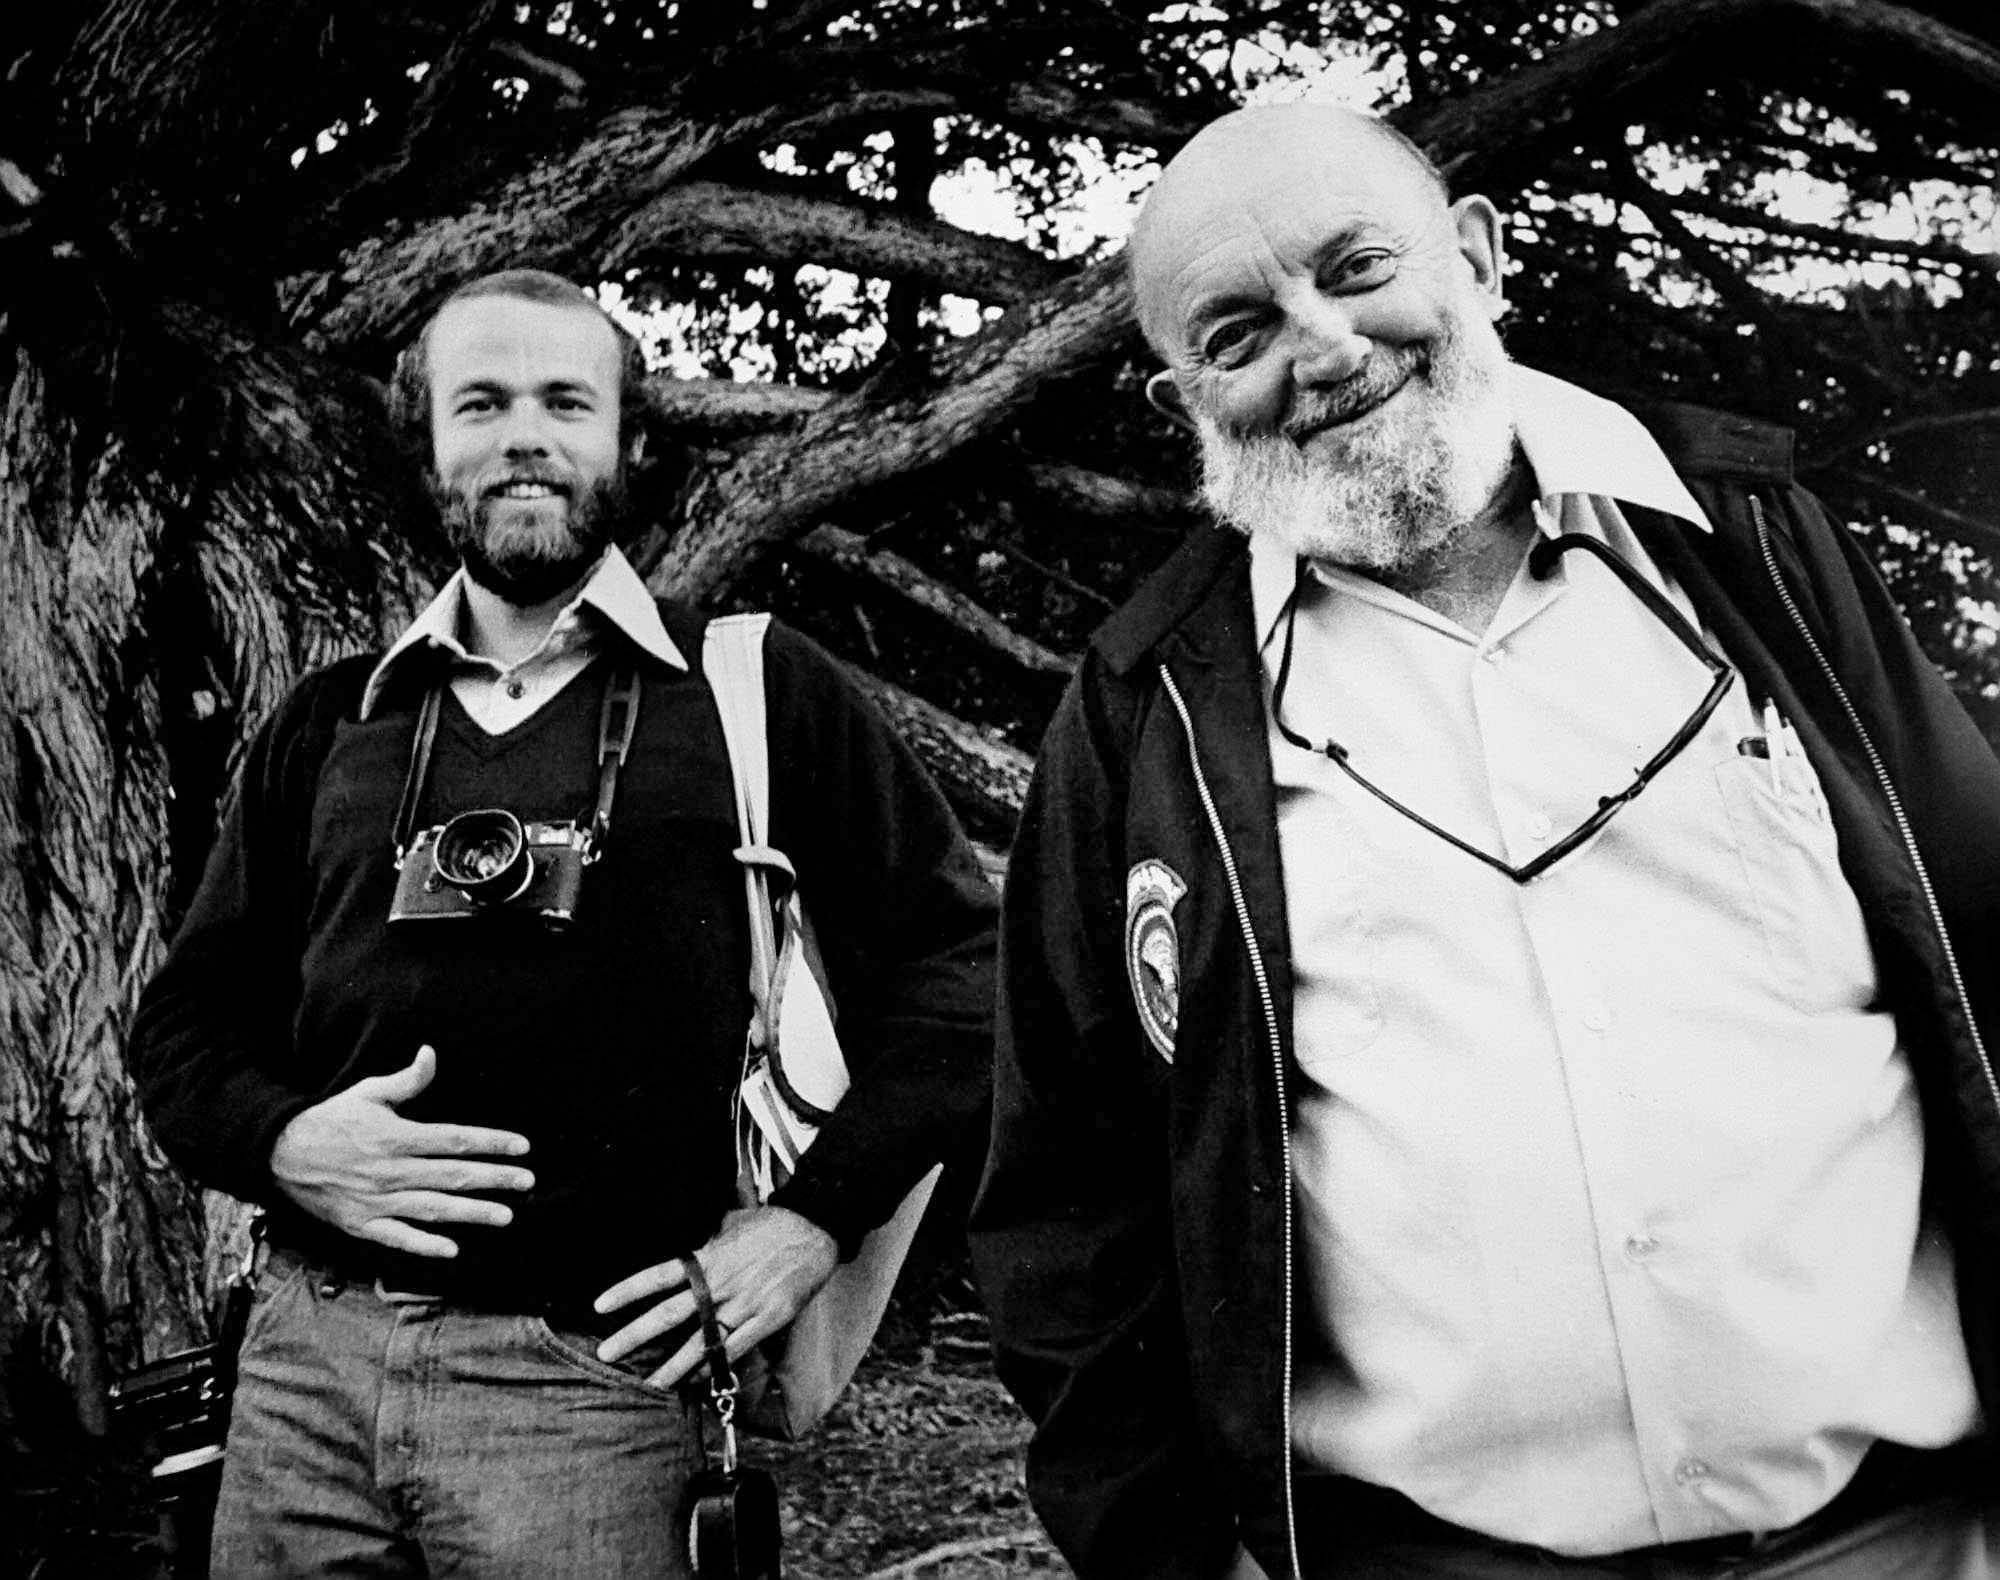 Ansel Adams and David Hume Kennerly in Carmel, 1975. 
Photo by Lynn Goldsmith